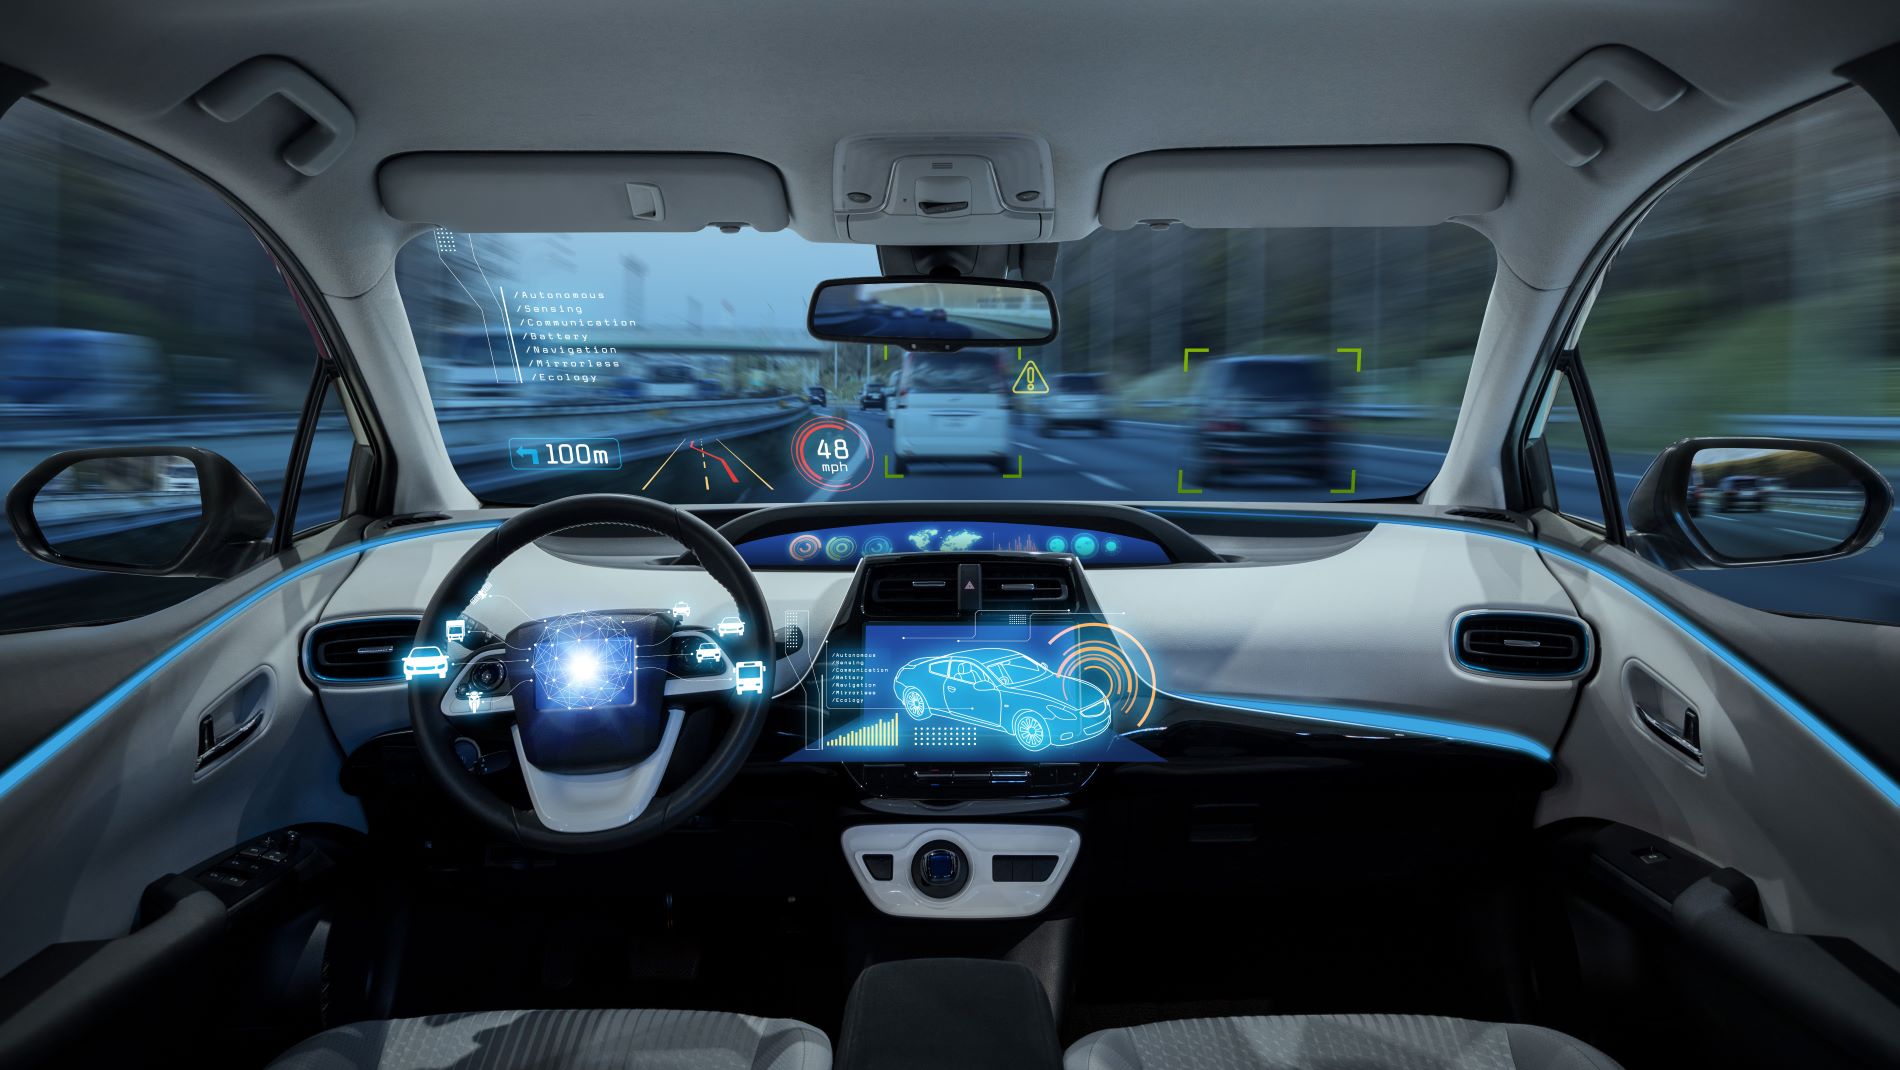 Most electric cars feature futuristic interior designs.